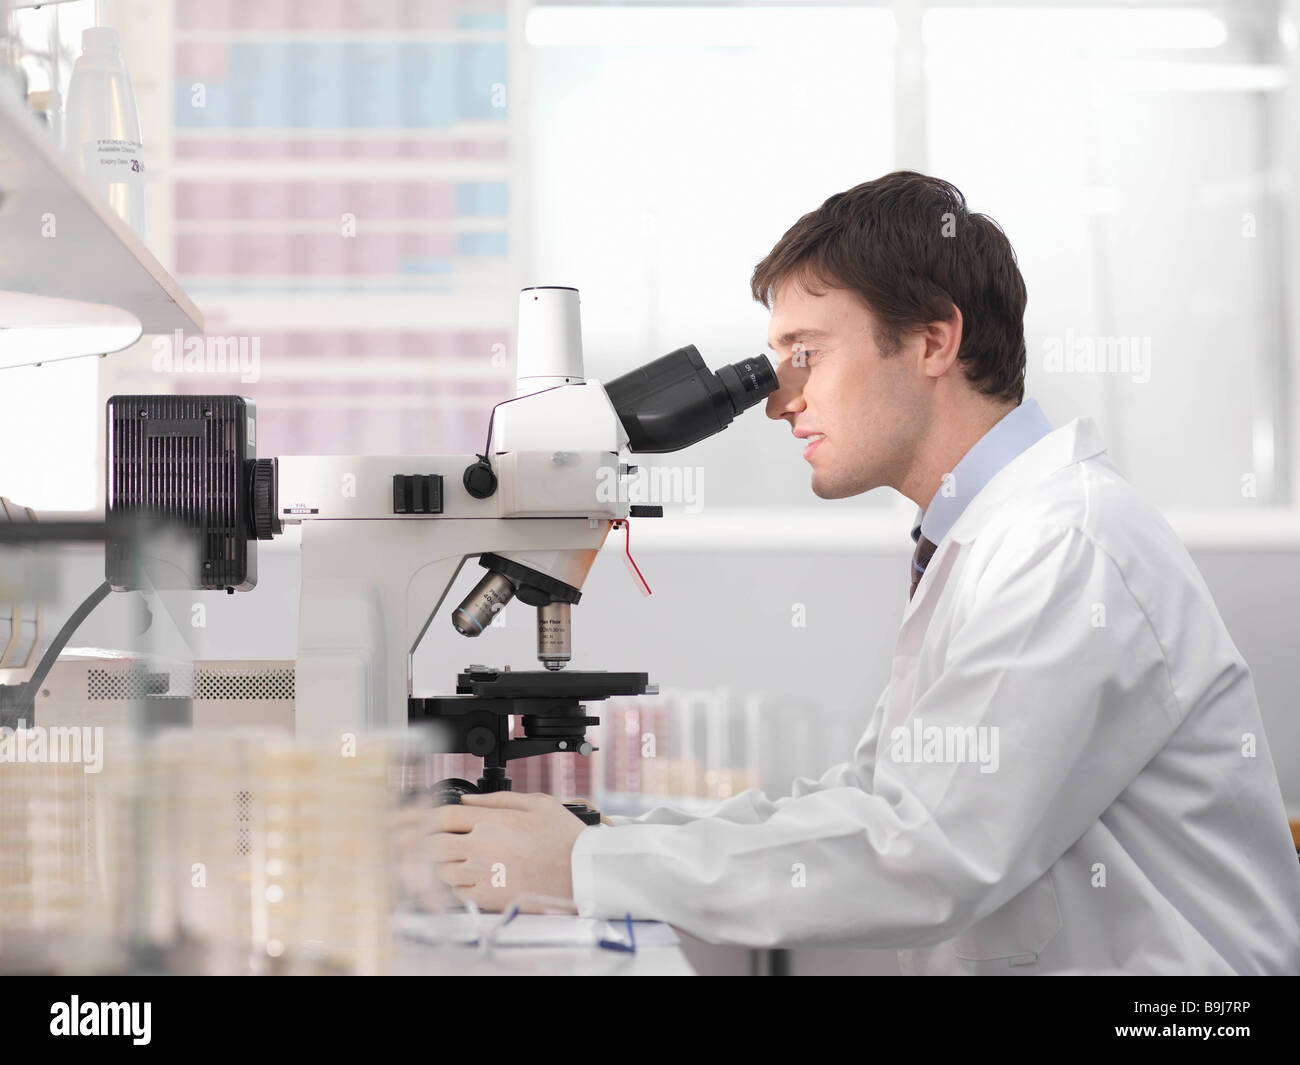 Laboratory technician with microscope Stock Photo